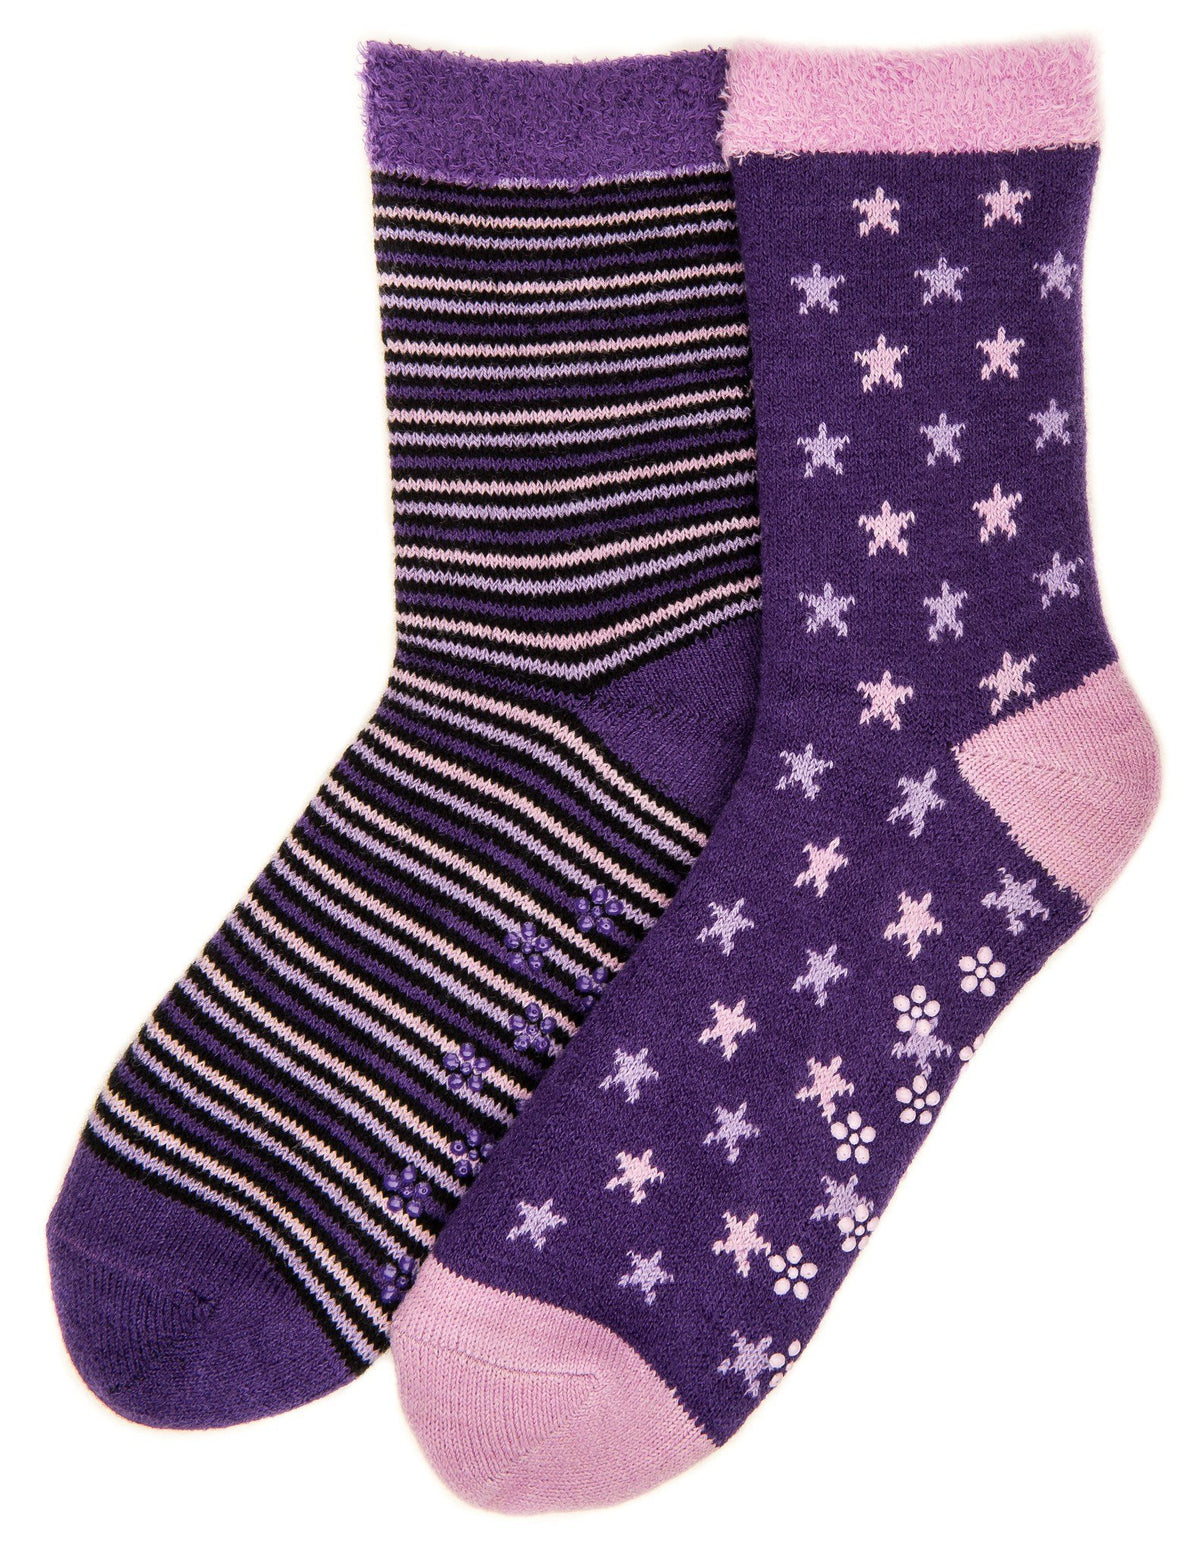 Women's Soft Premium Double Layer Winter Crew Socks - 2 Pairs - Set A3